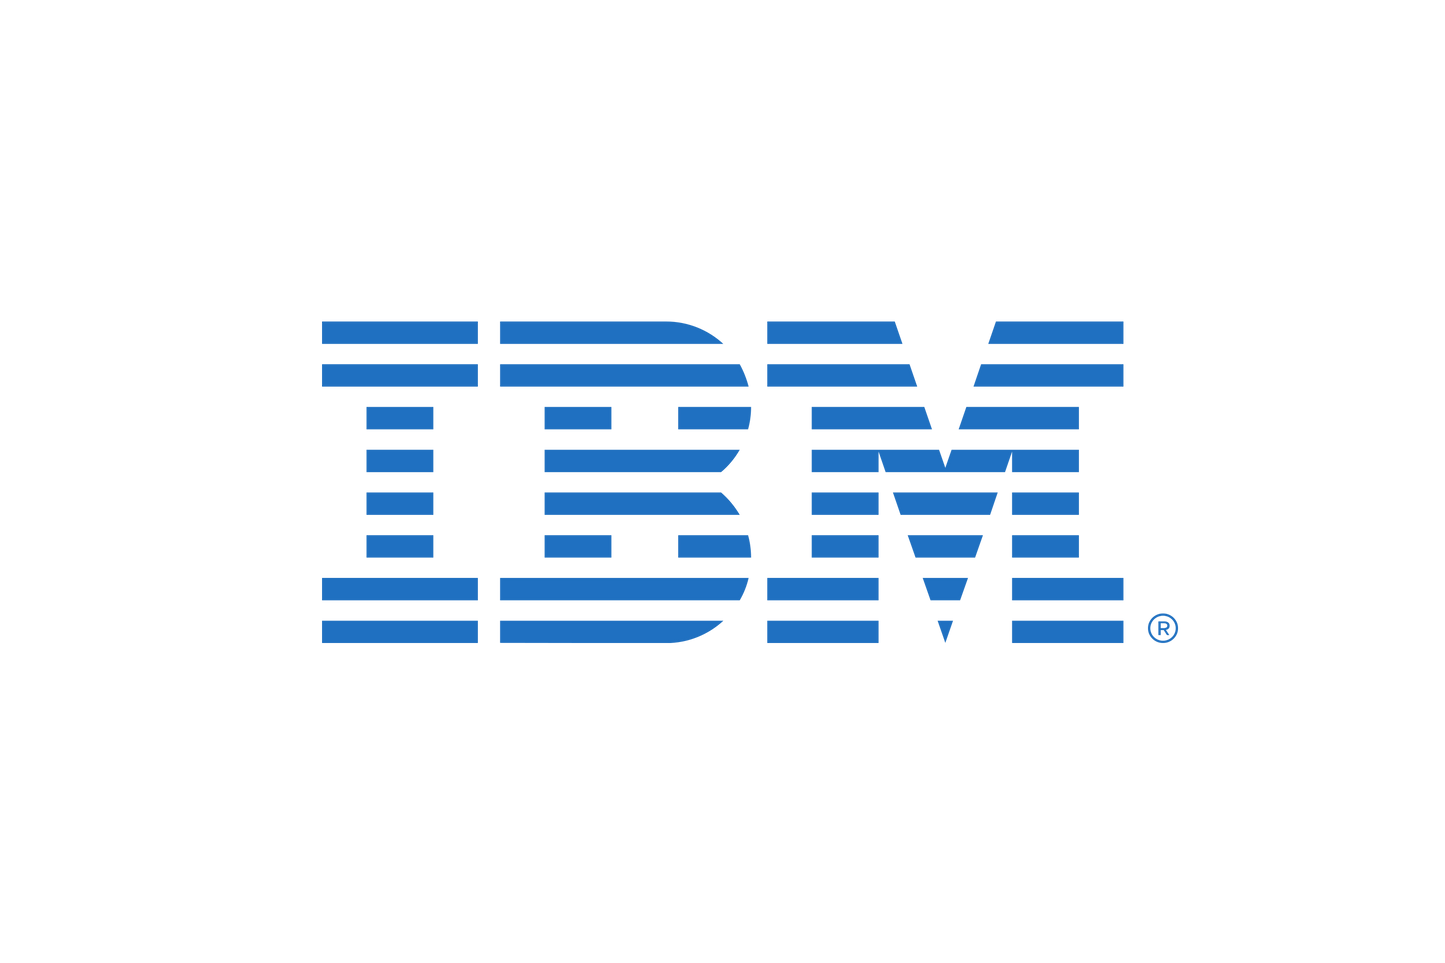 IBM Sterling B2B Services Integration Basic RosettaNet Trade Partner Configuration Set Up charge per PIP